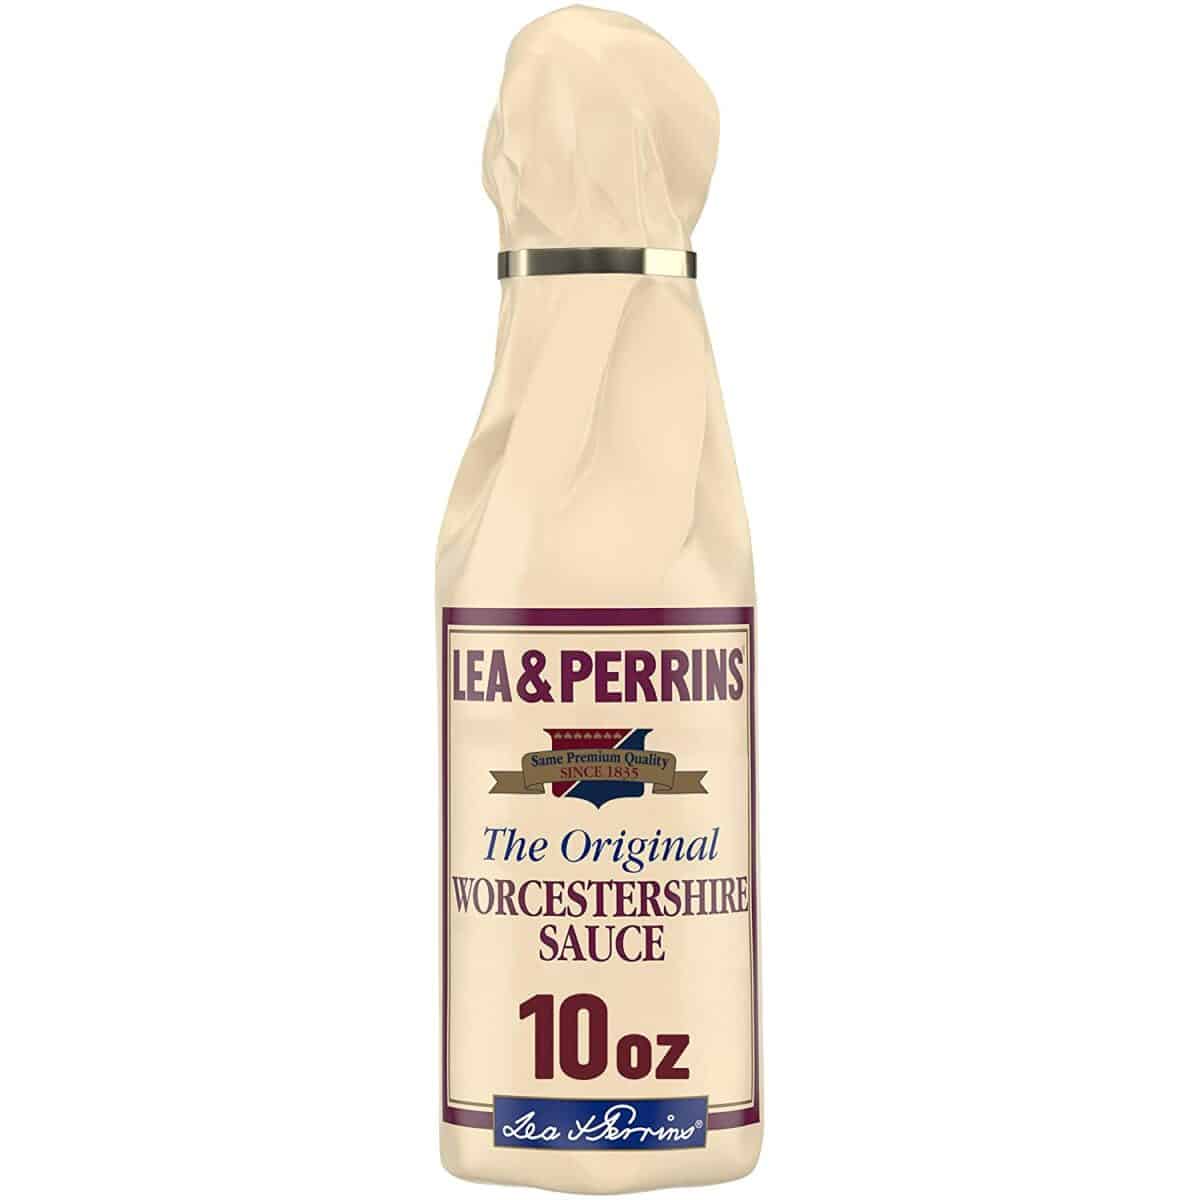 La mejor salsa tradicional: Lea & Perrins The Original Worcestershire Sauce